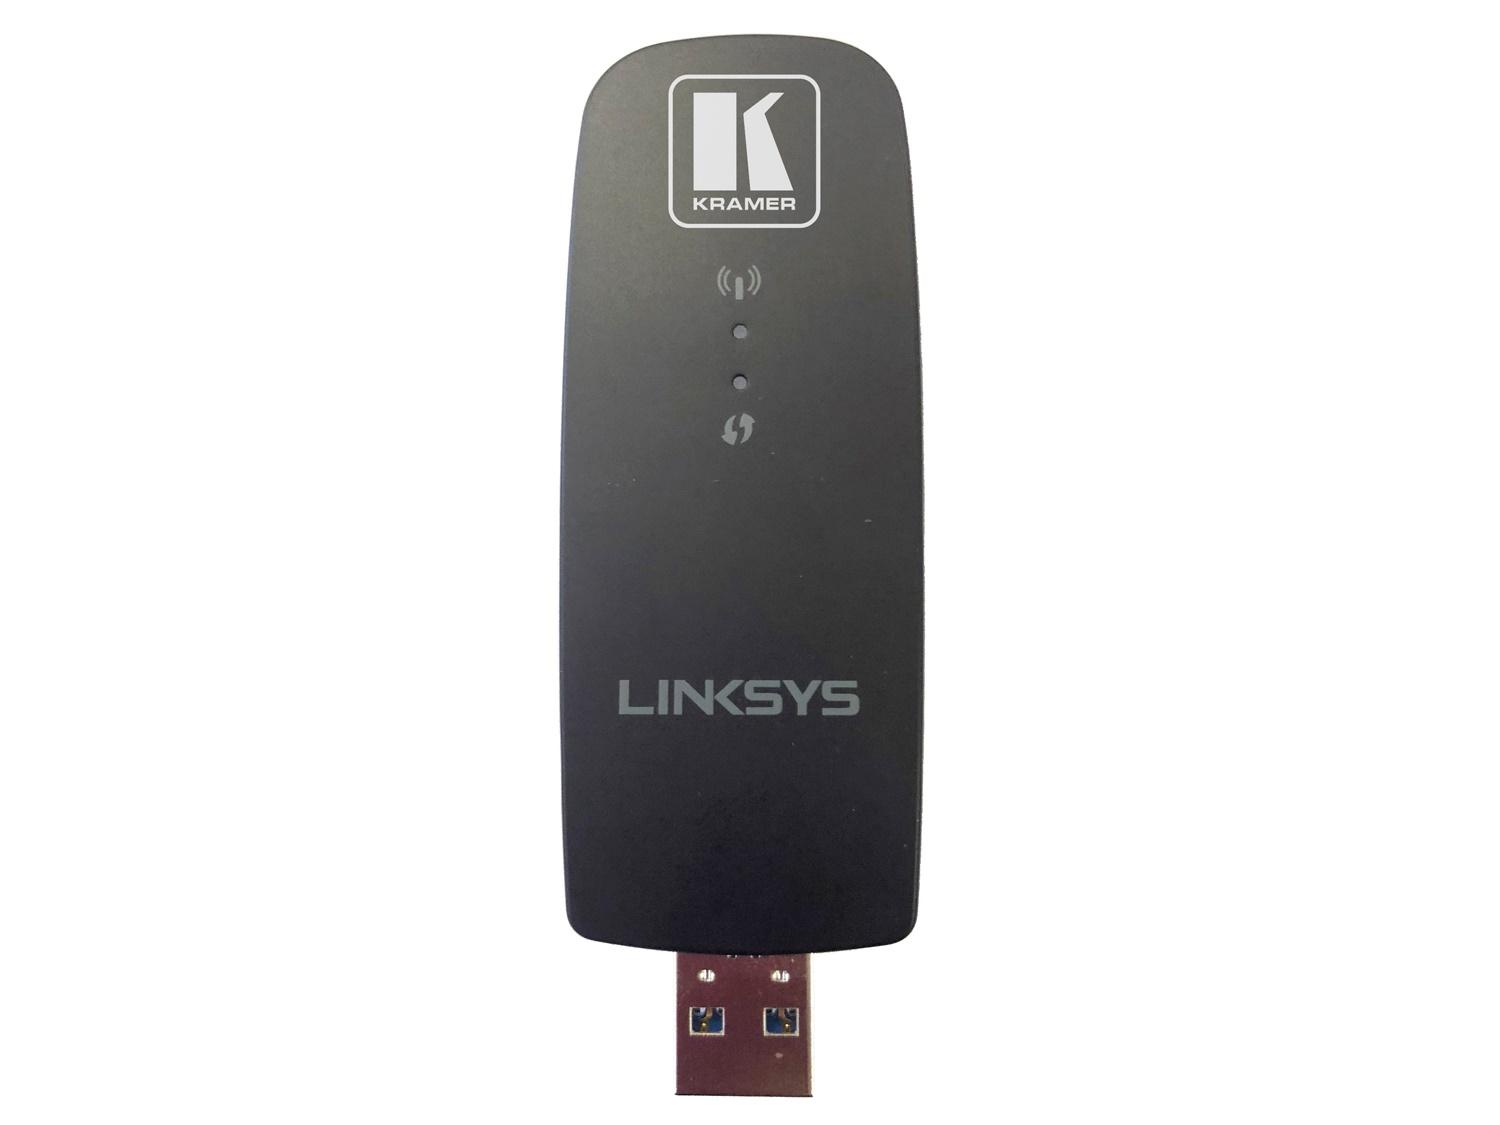 Kramer VIAcast Miracast Enabled USB Dongle for VIA Devices